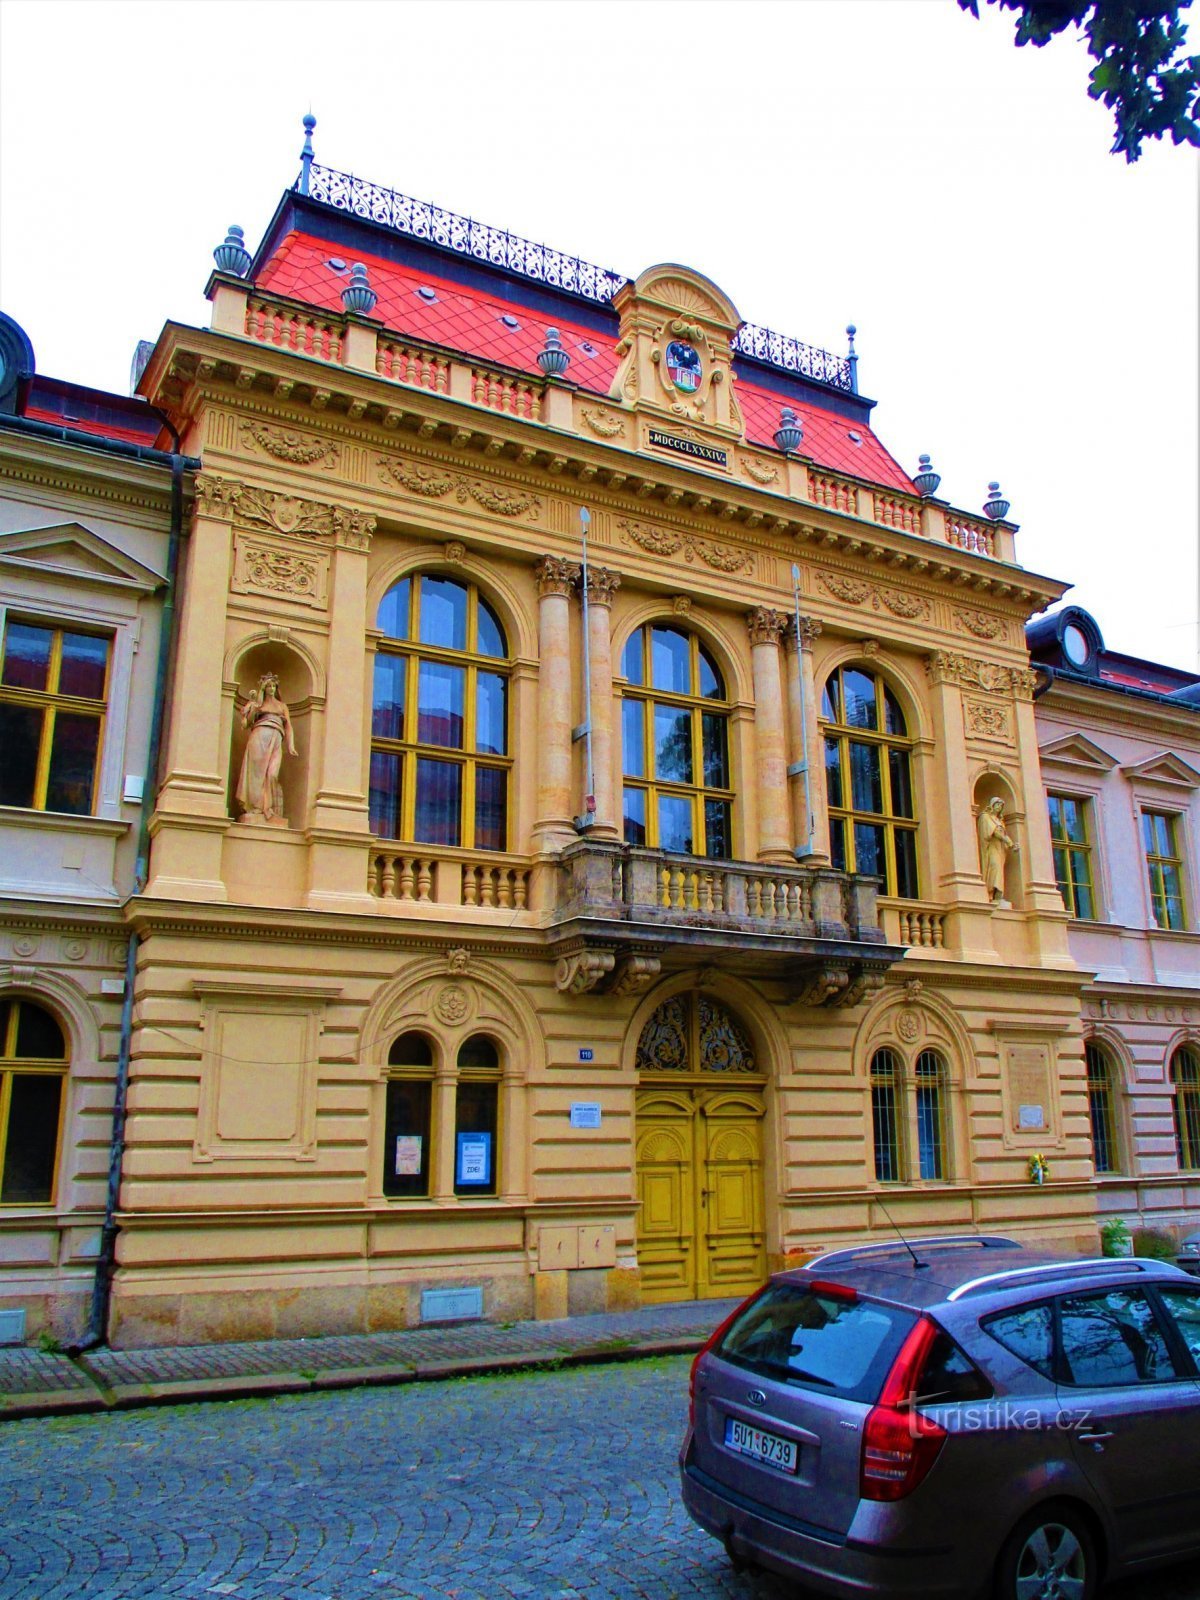 Stara mestna hiša (Josefov, 1.8.2021)